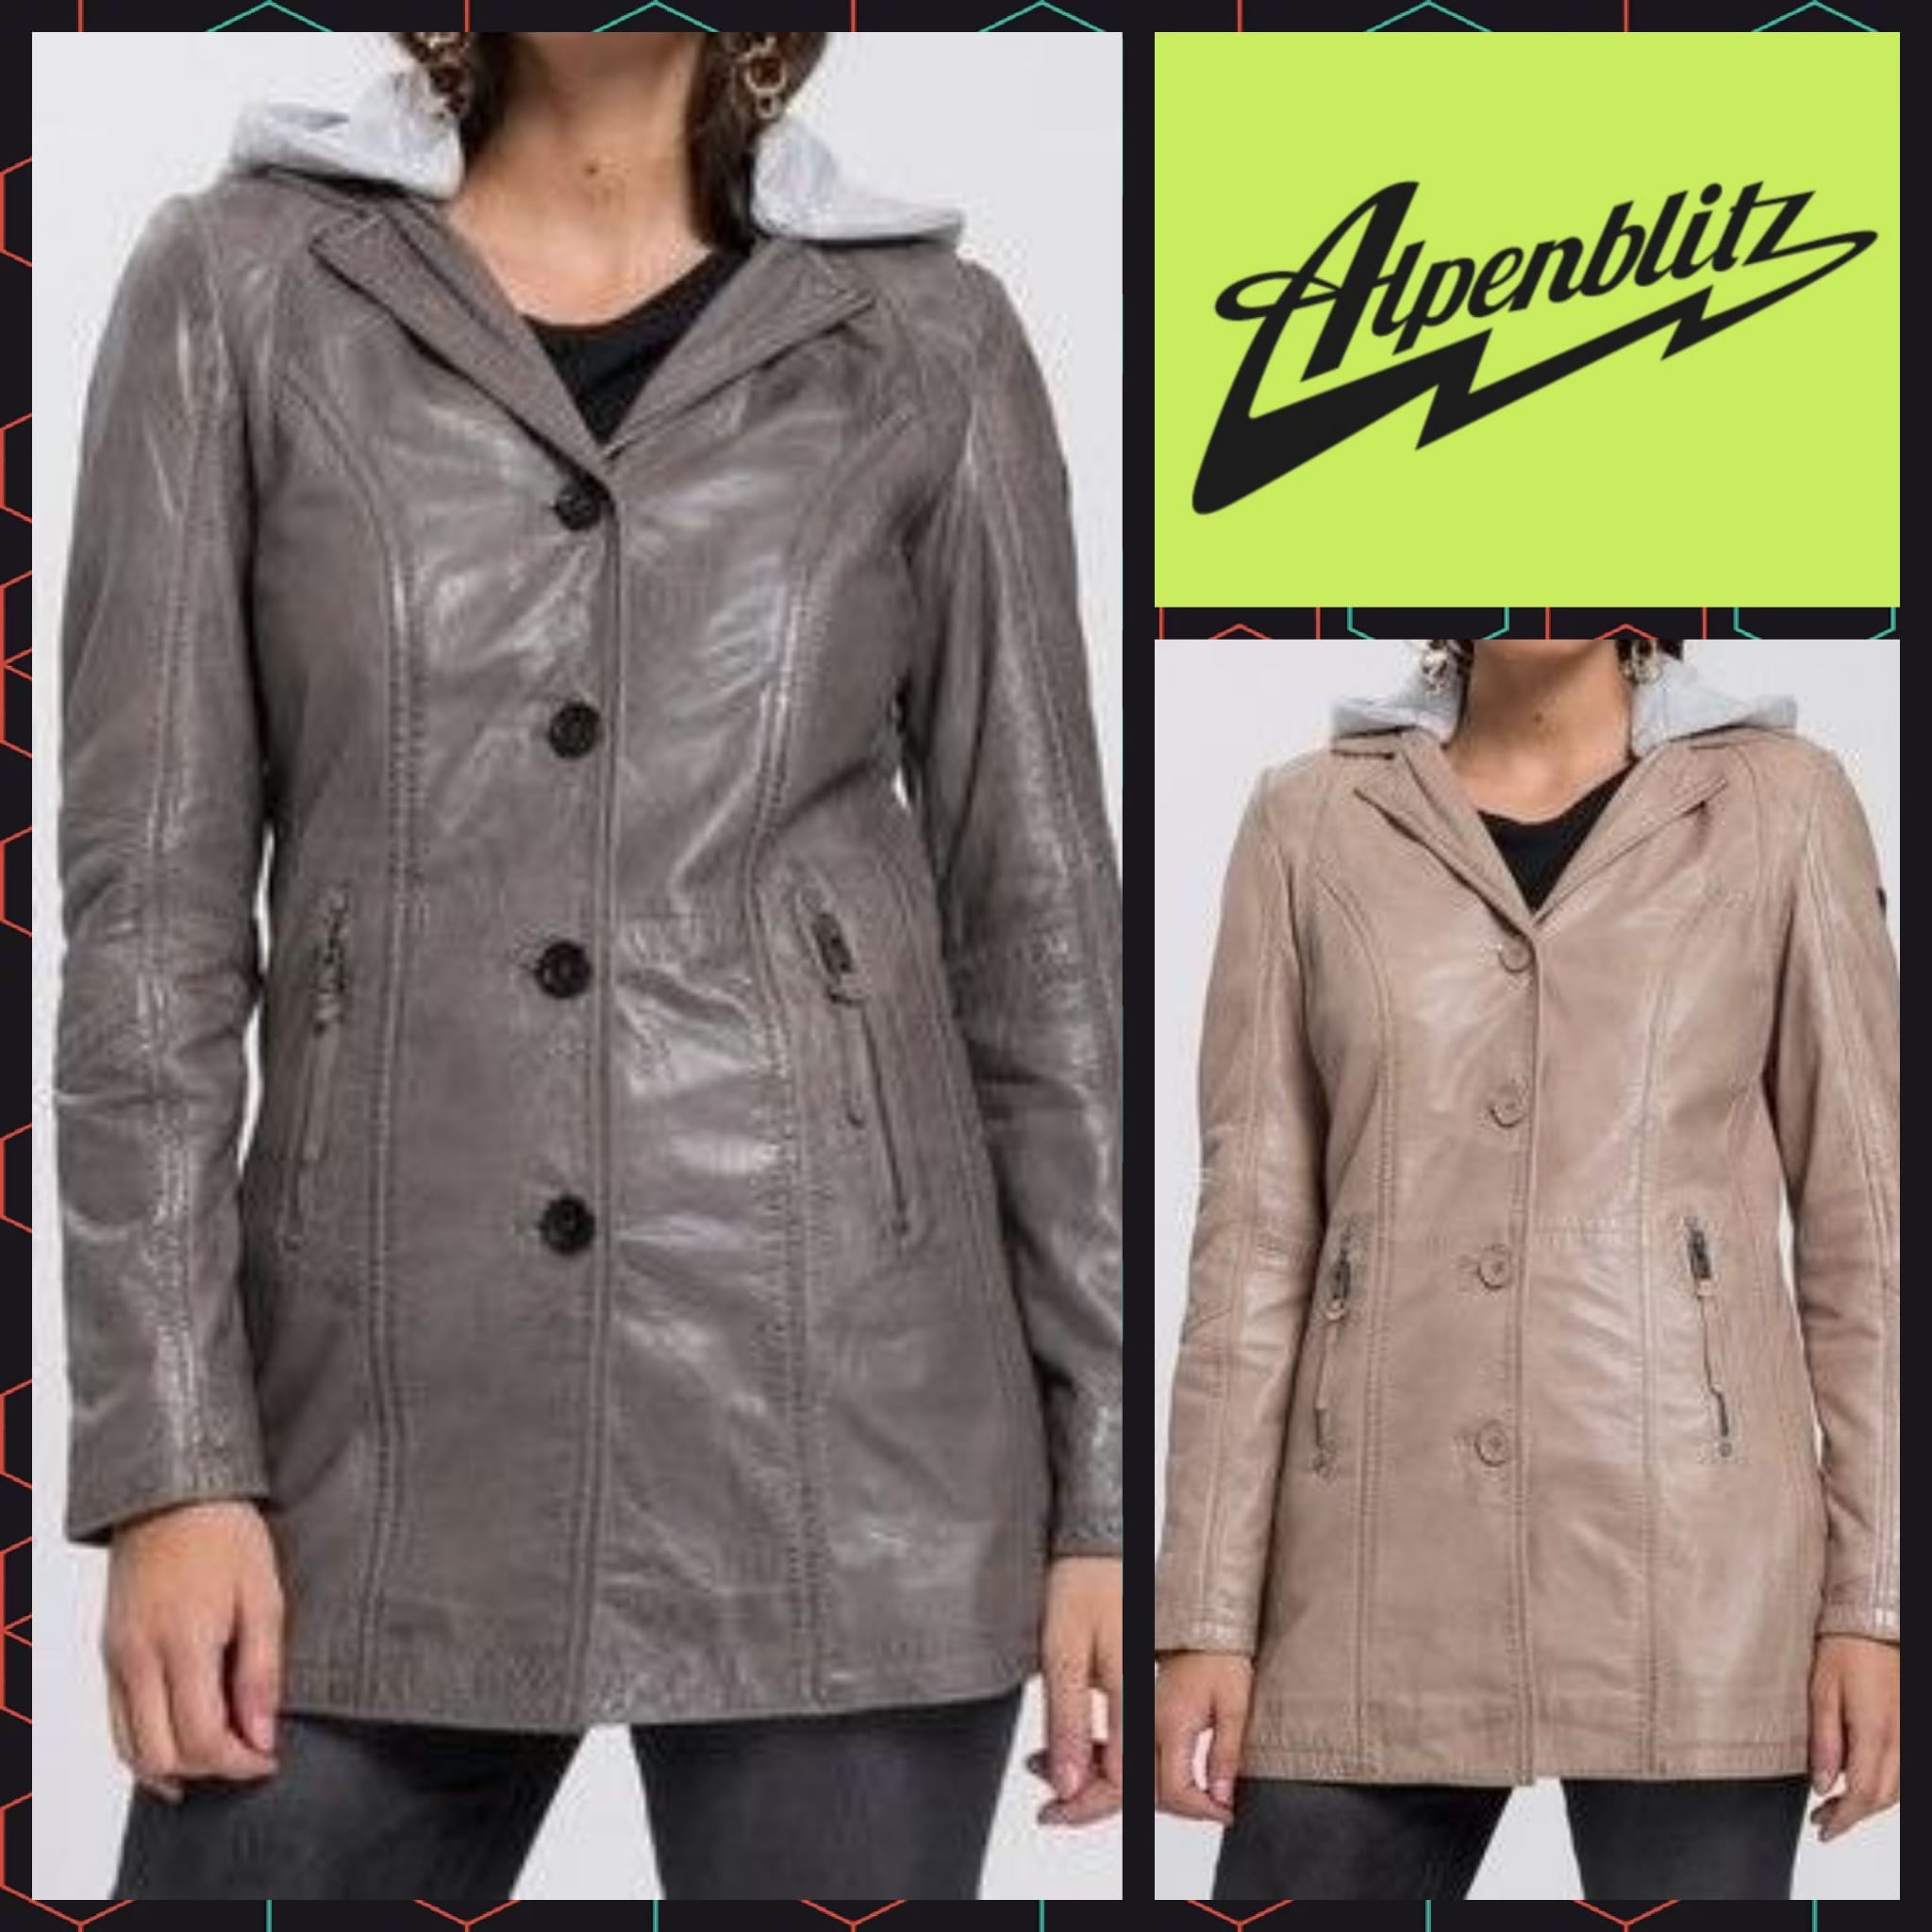 Women's leather jackets from Alpenblitz